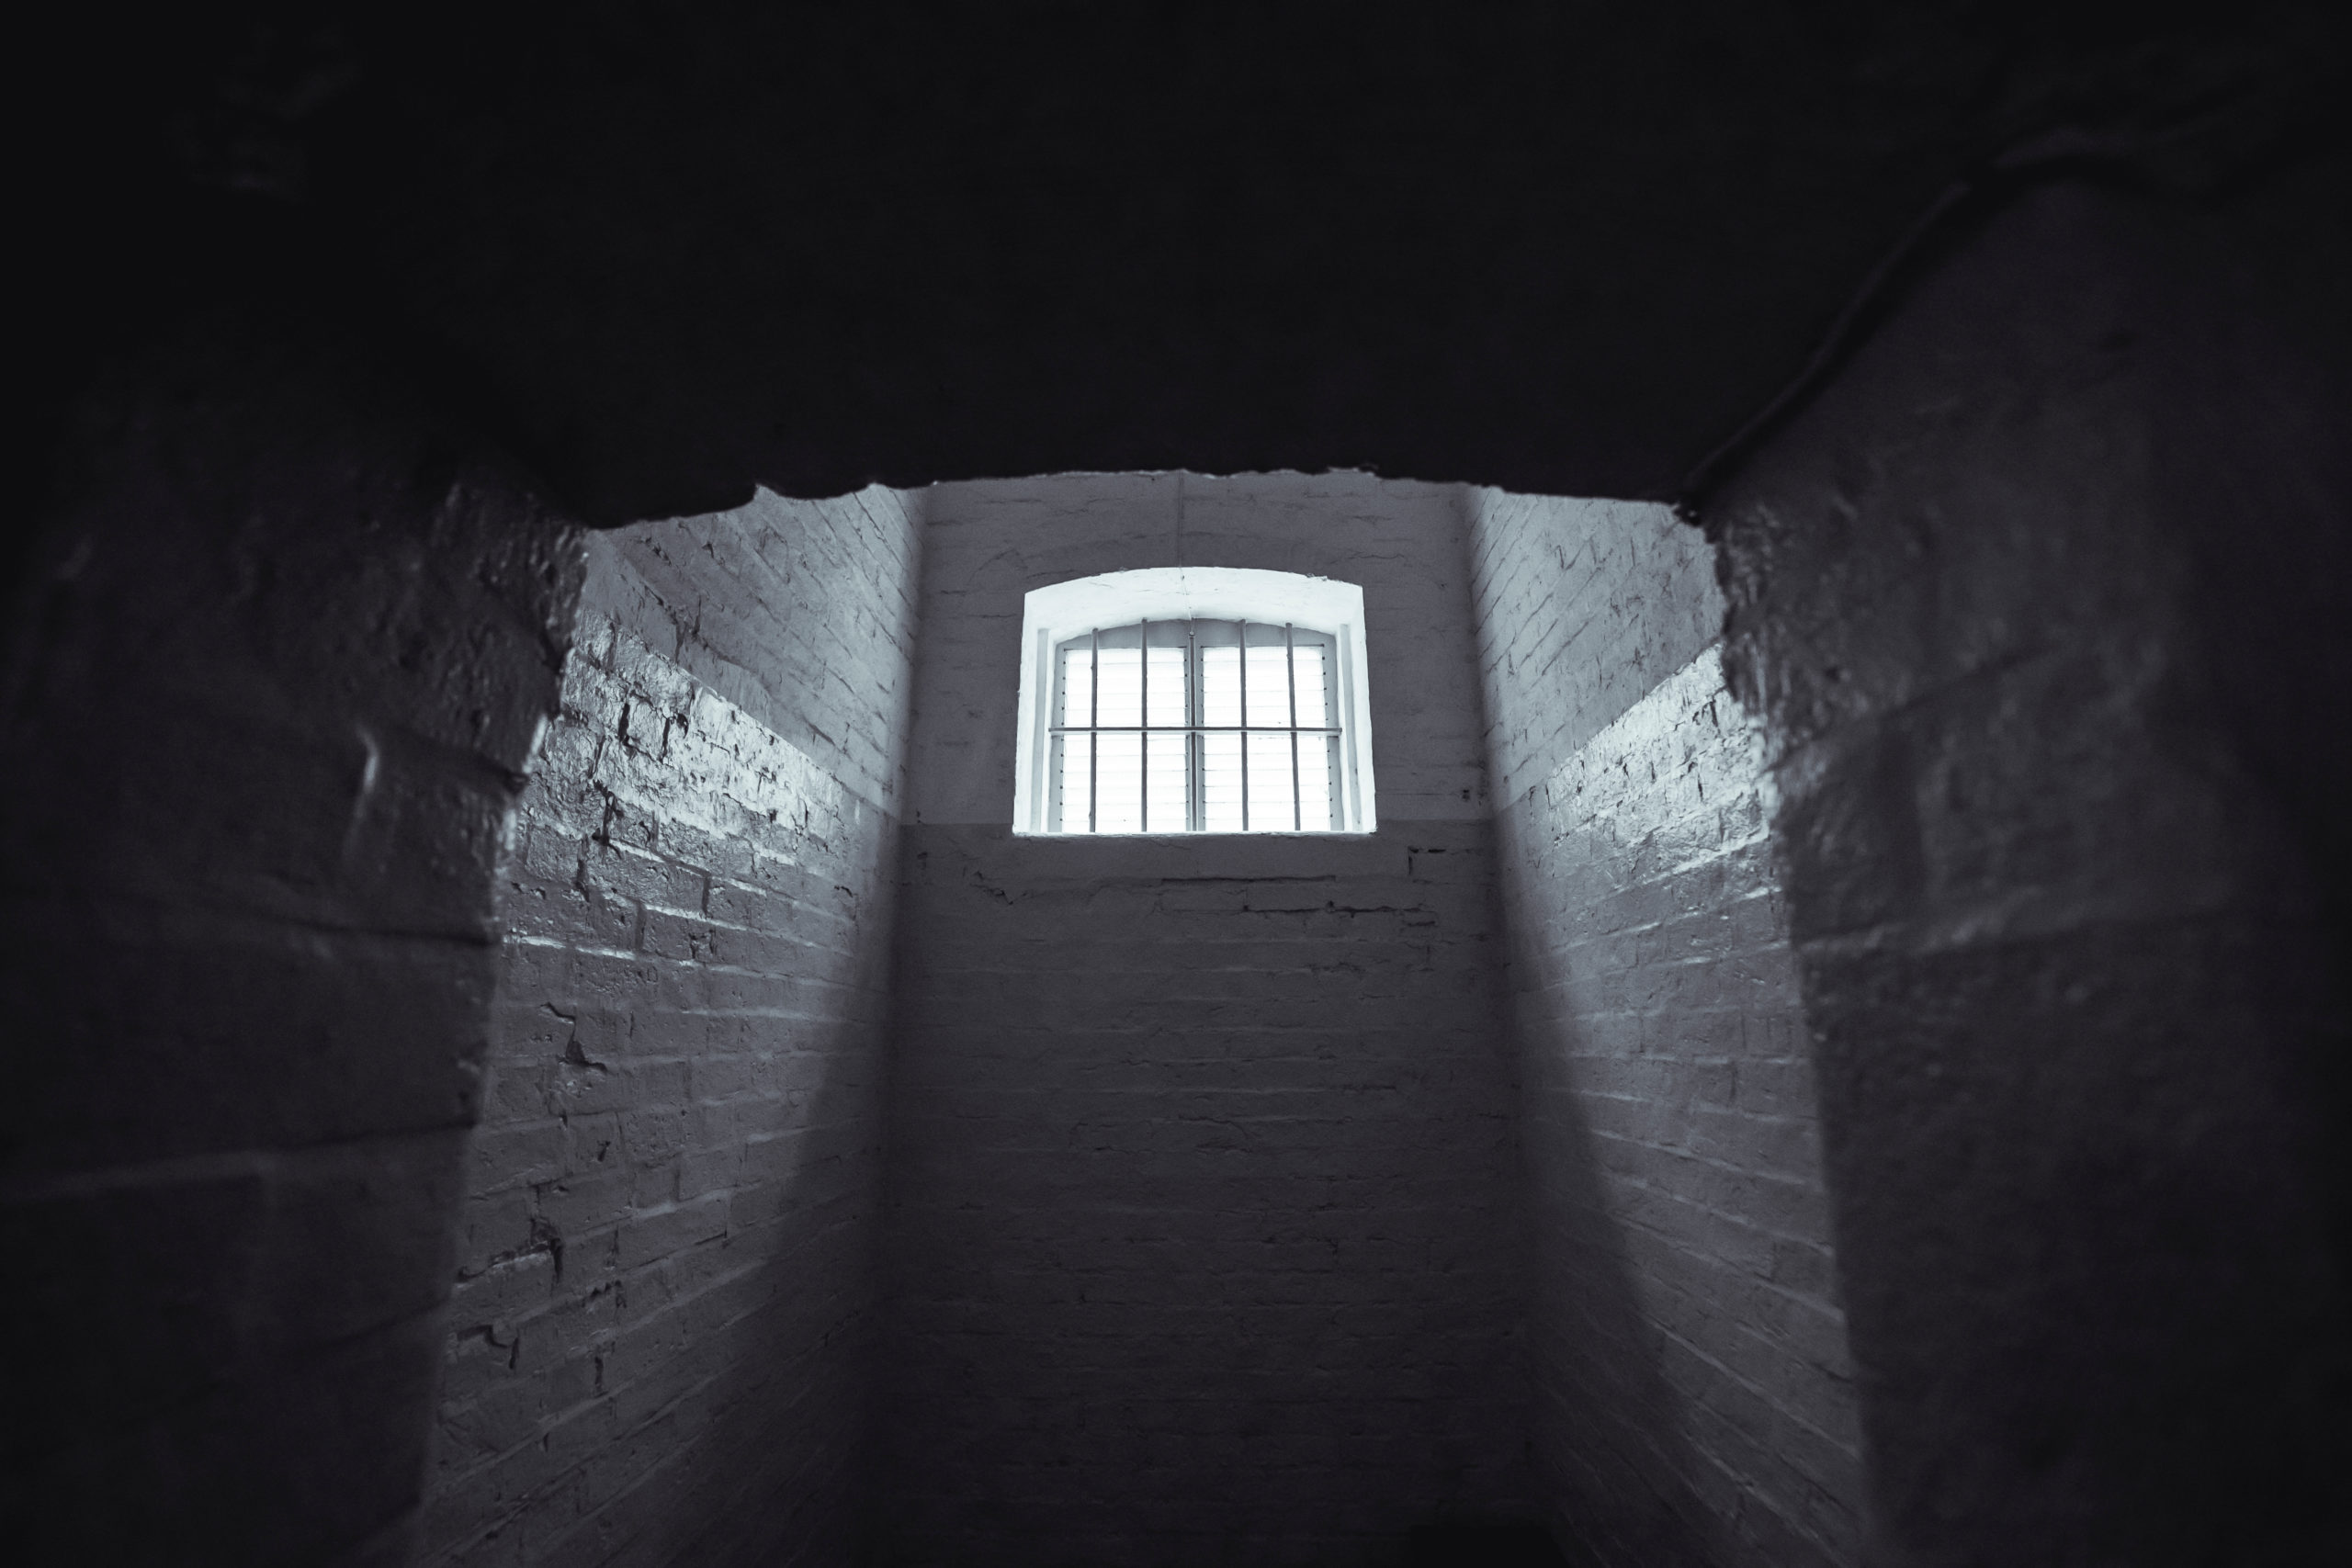 Image of light coming through prison window